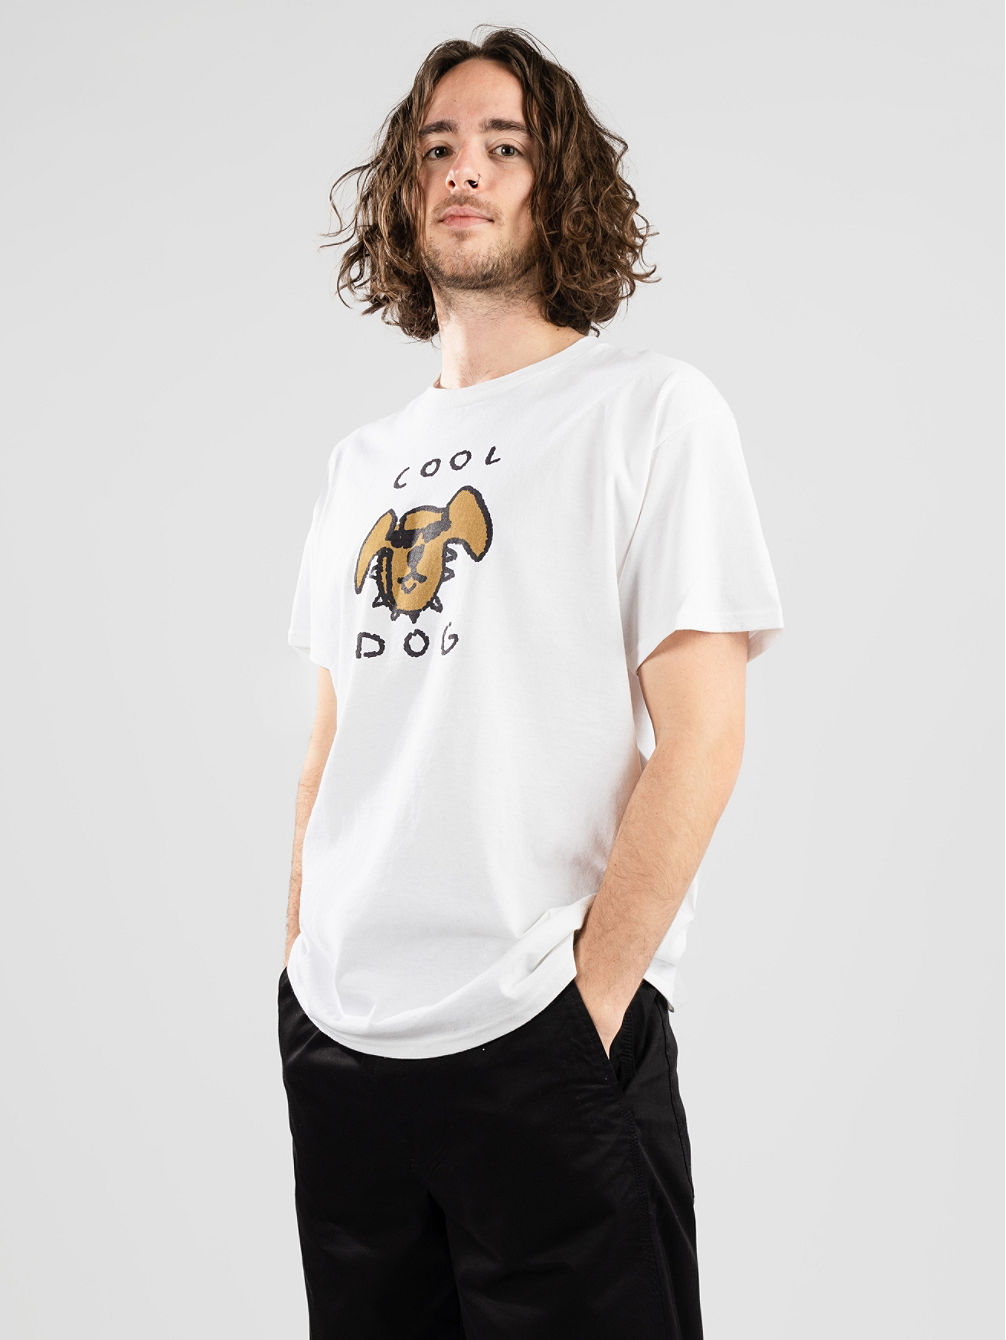 Cool Dog Camiseta